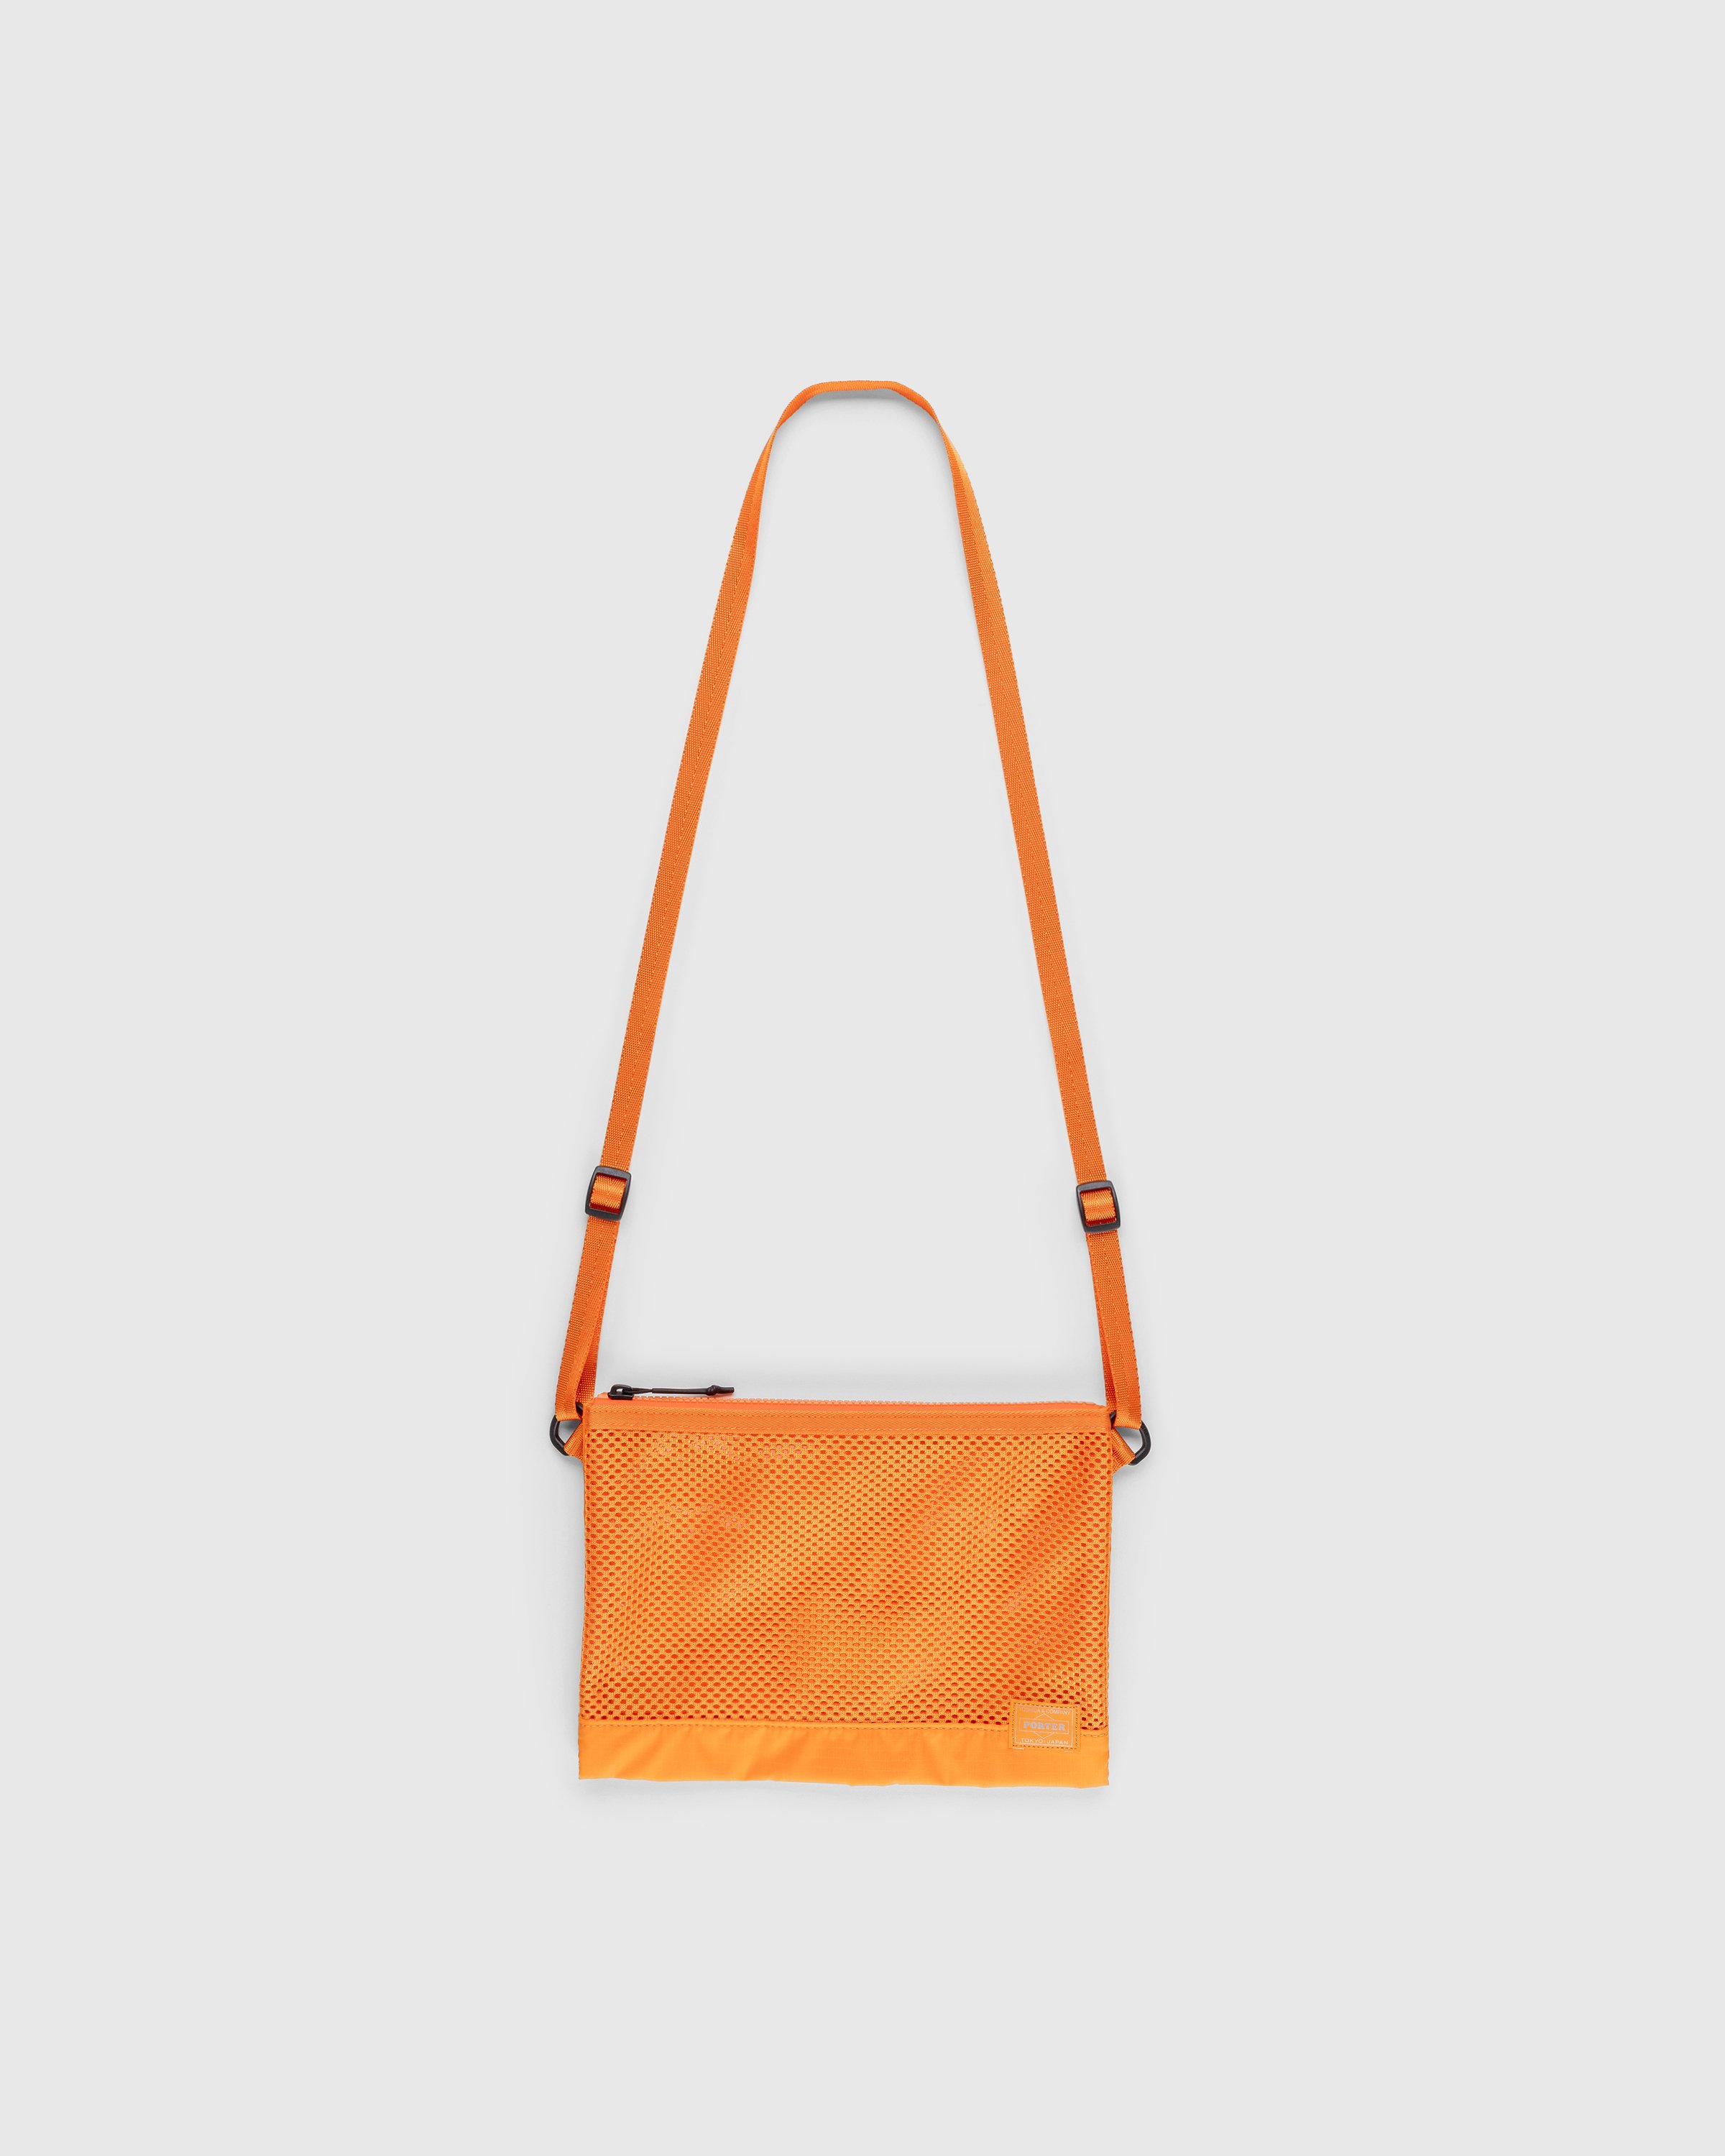 Porter-Yoshida & Co. - Sacoche Screen Shoulder Bag Orange - Accessories - Orange - Image 1